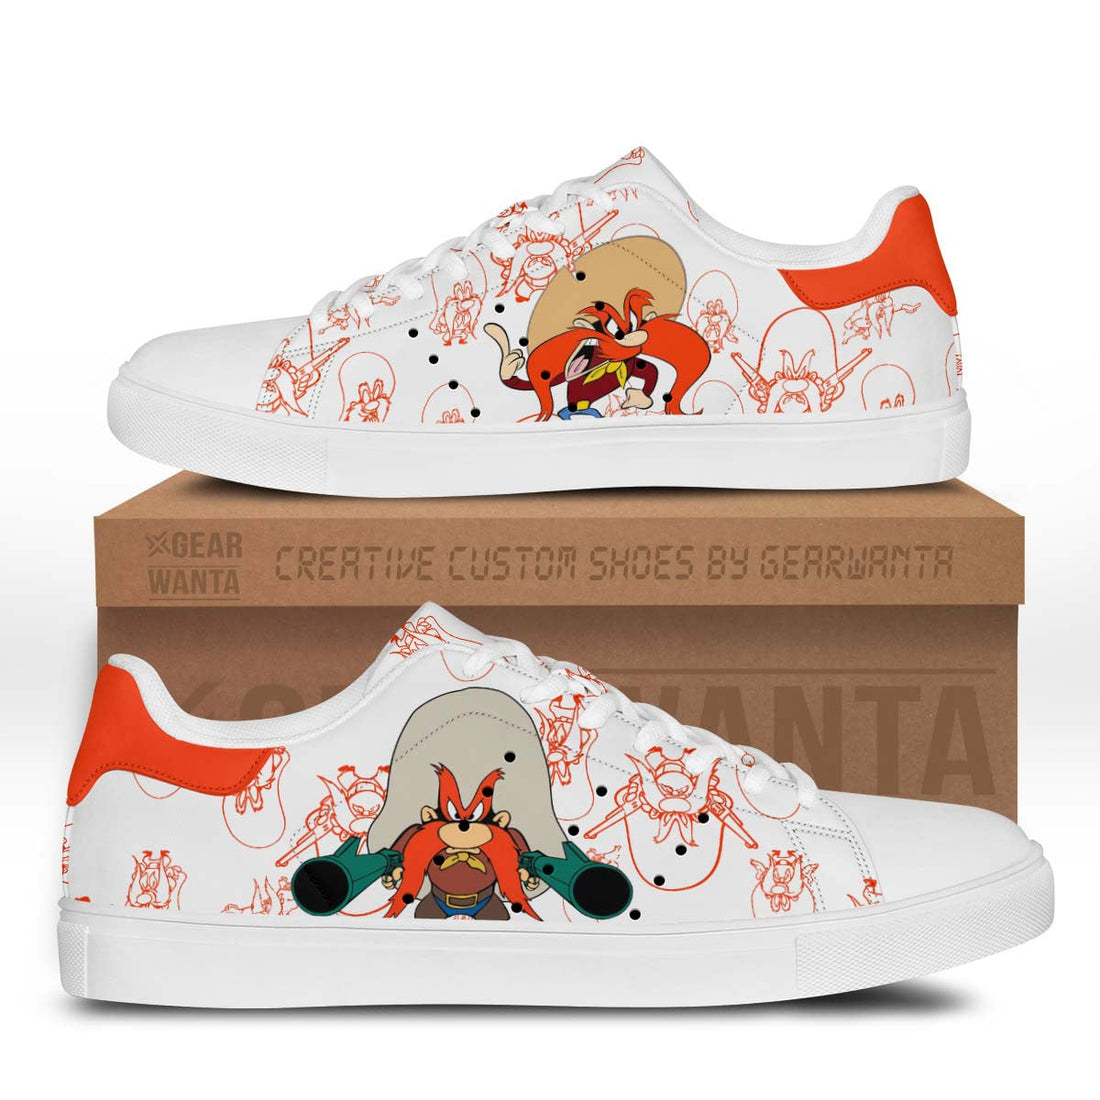 Yosemite Sam Stan Shoes Custom Looney Tunes Sneakers For Fans-Gear Wanta